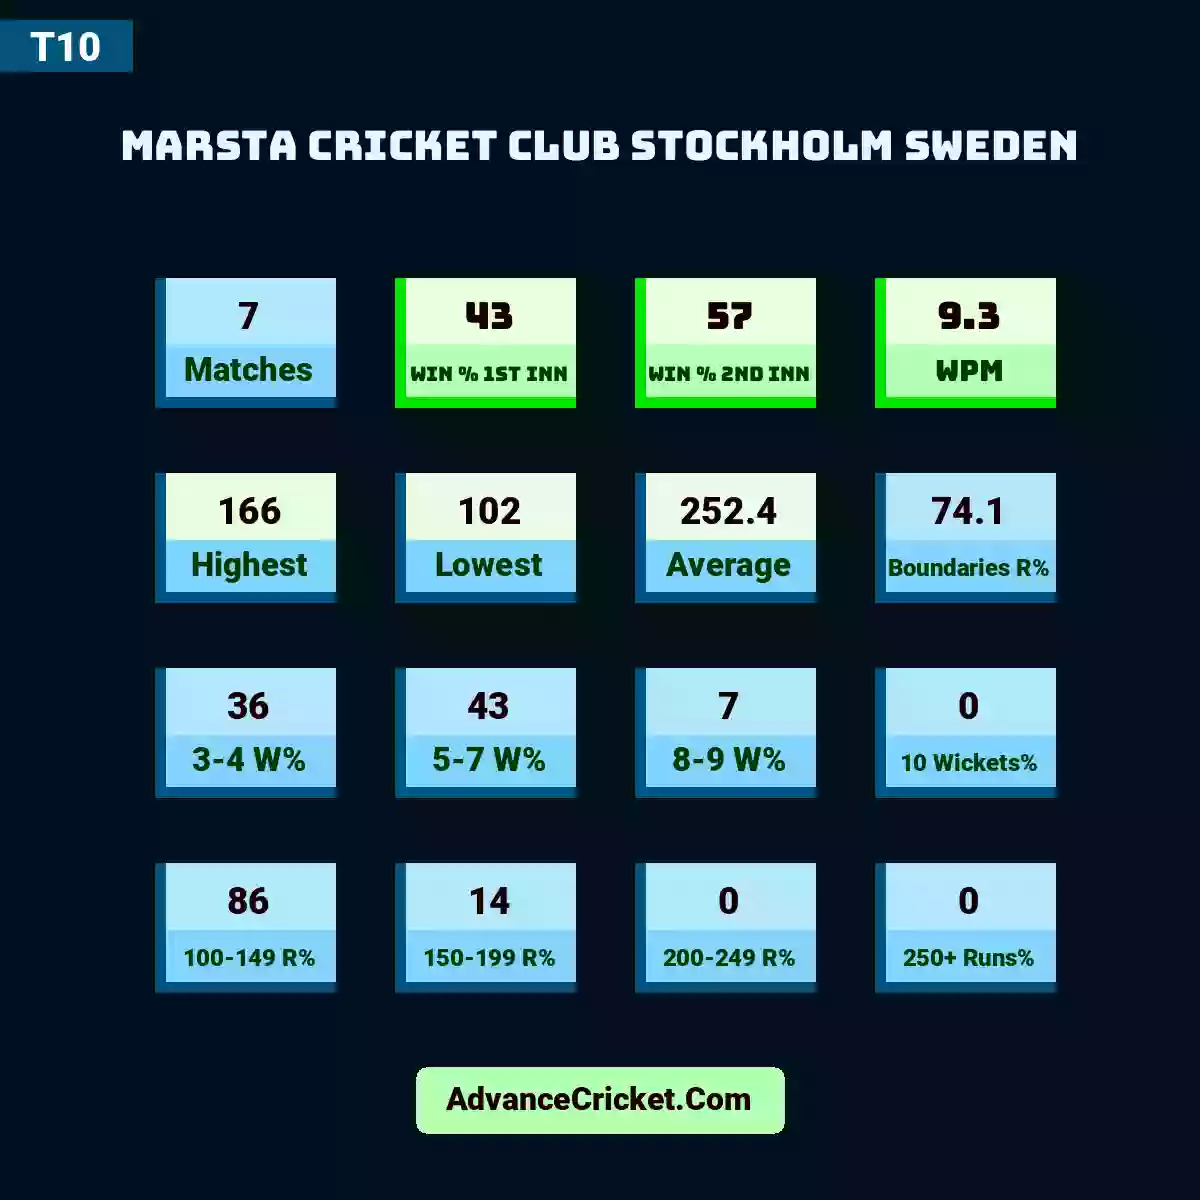 Image showing Marsta Cricket Club Stockholm Sweden with Matches: 7, Win % 1st Inn: 43, Win % 2nd Inn: 57, WPM: 9.3, Highest: 166, Lowest: 102, Average: 252.4, Boundaries R%: 74.1, 3-4 W%: 36, 5-7 W%: 43, 8-9 W%: 7, 10 Wickets%: 0, 100-149 R%: 86, 150-199 R%: 14, 200-249 R%: 0, 250+ Runs%: 0.